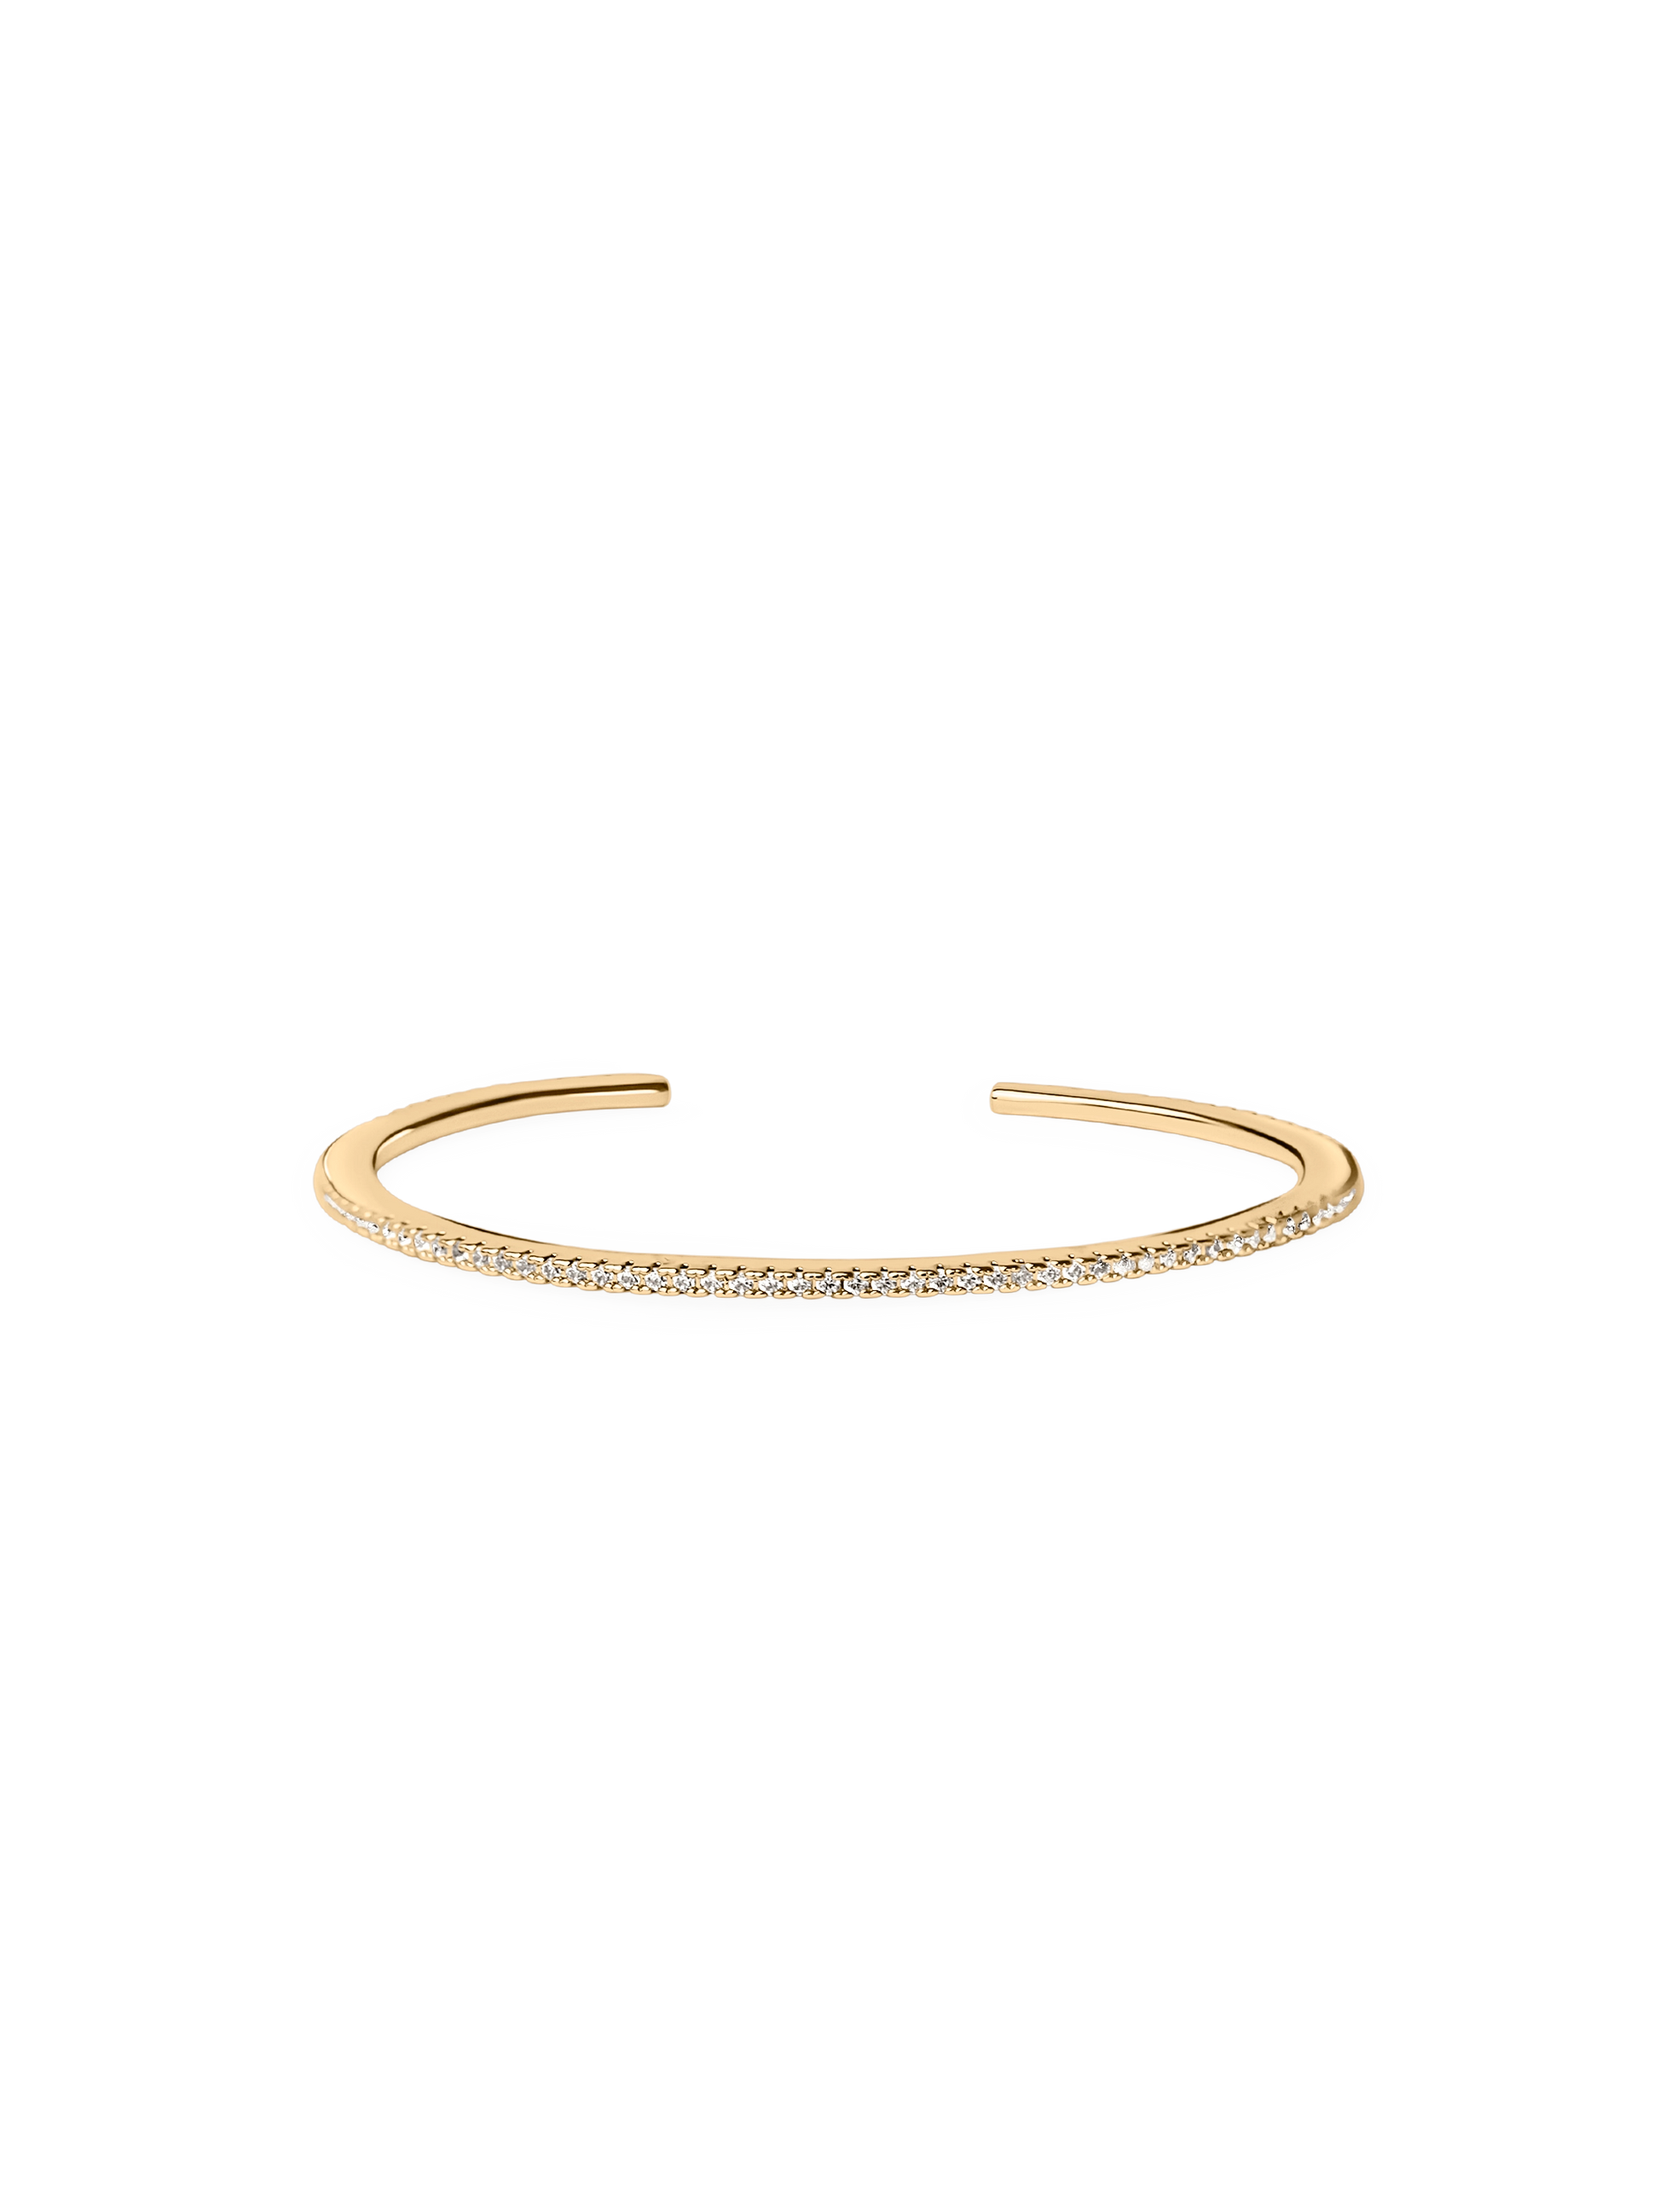 Zirconia bangle bracelet made in 18k gold plated brass